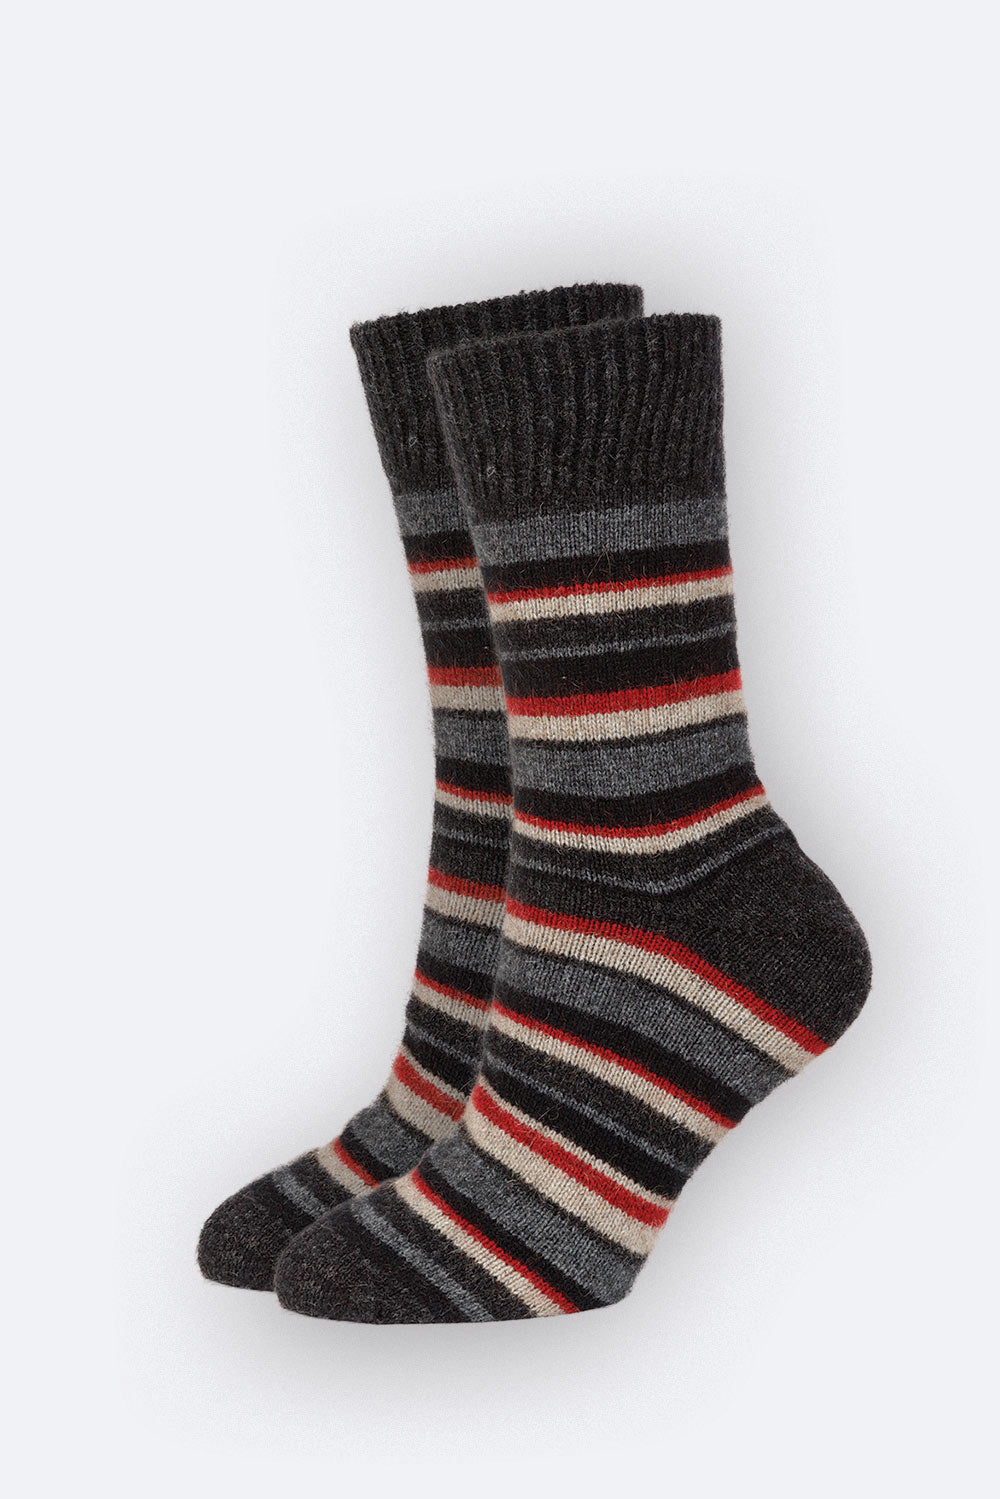 Striped Socks by Native World